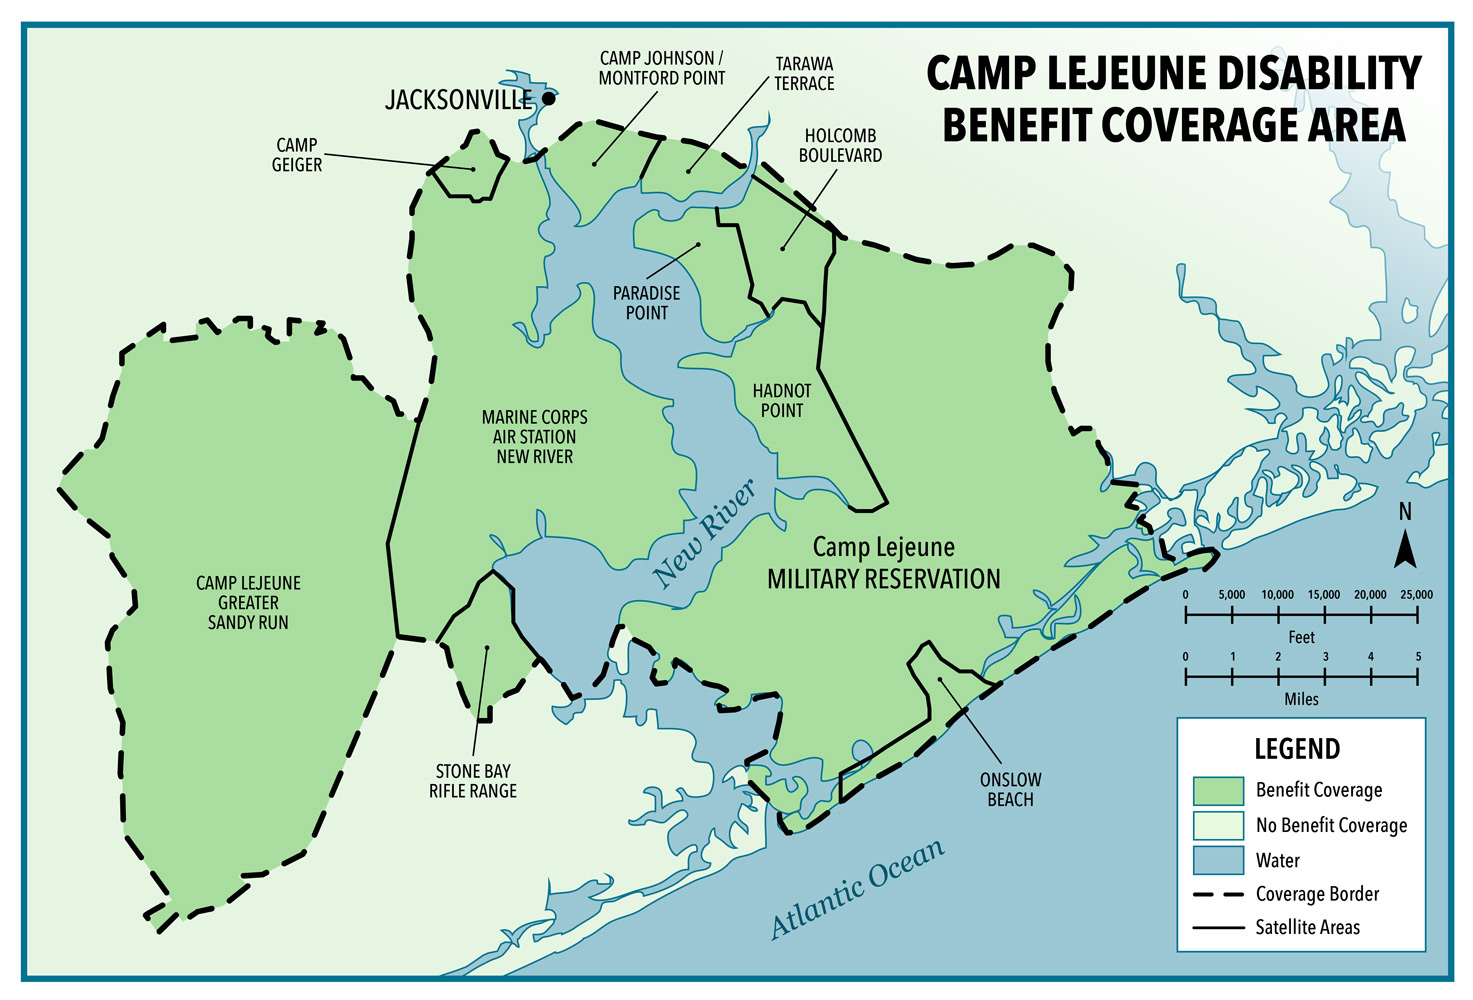 Camp Lejeune Disability Benefit Coverage Area Map